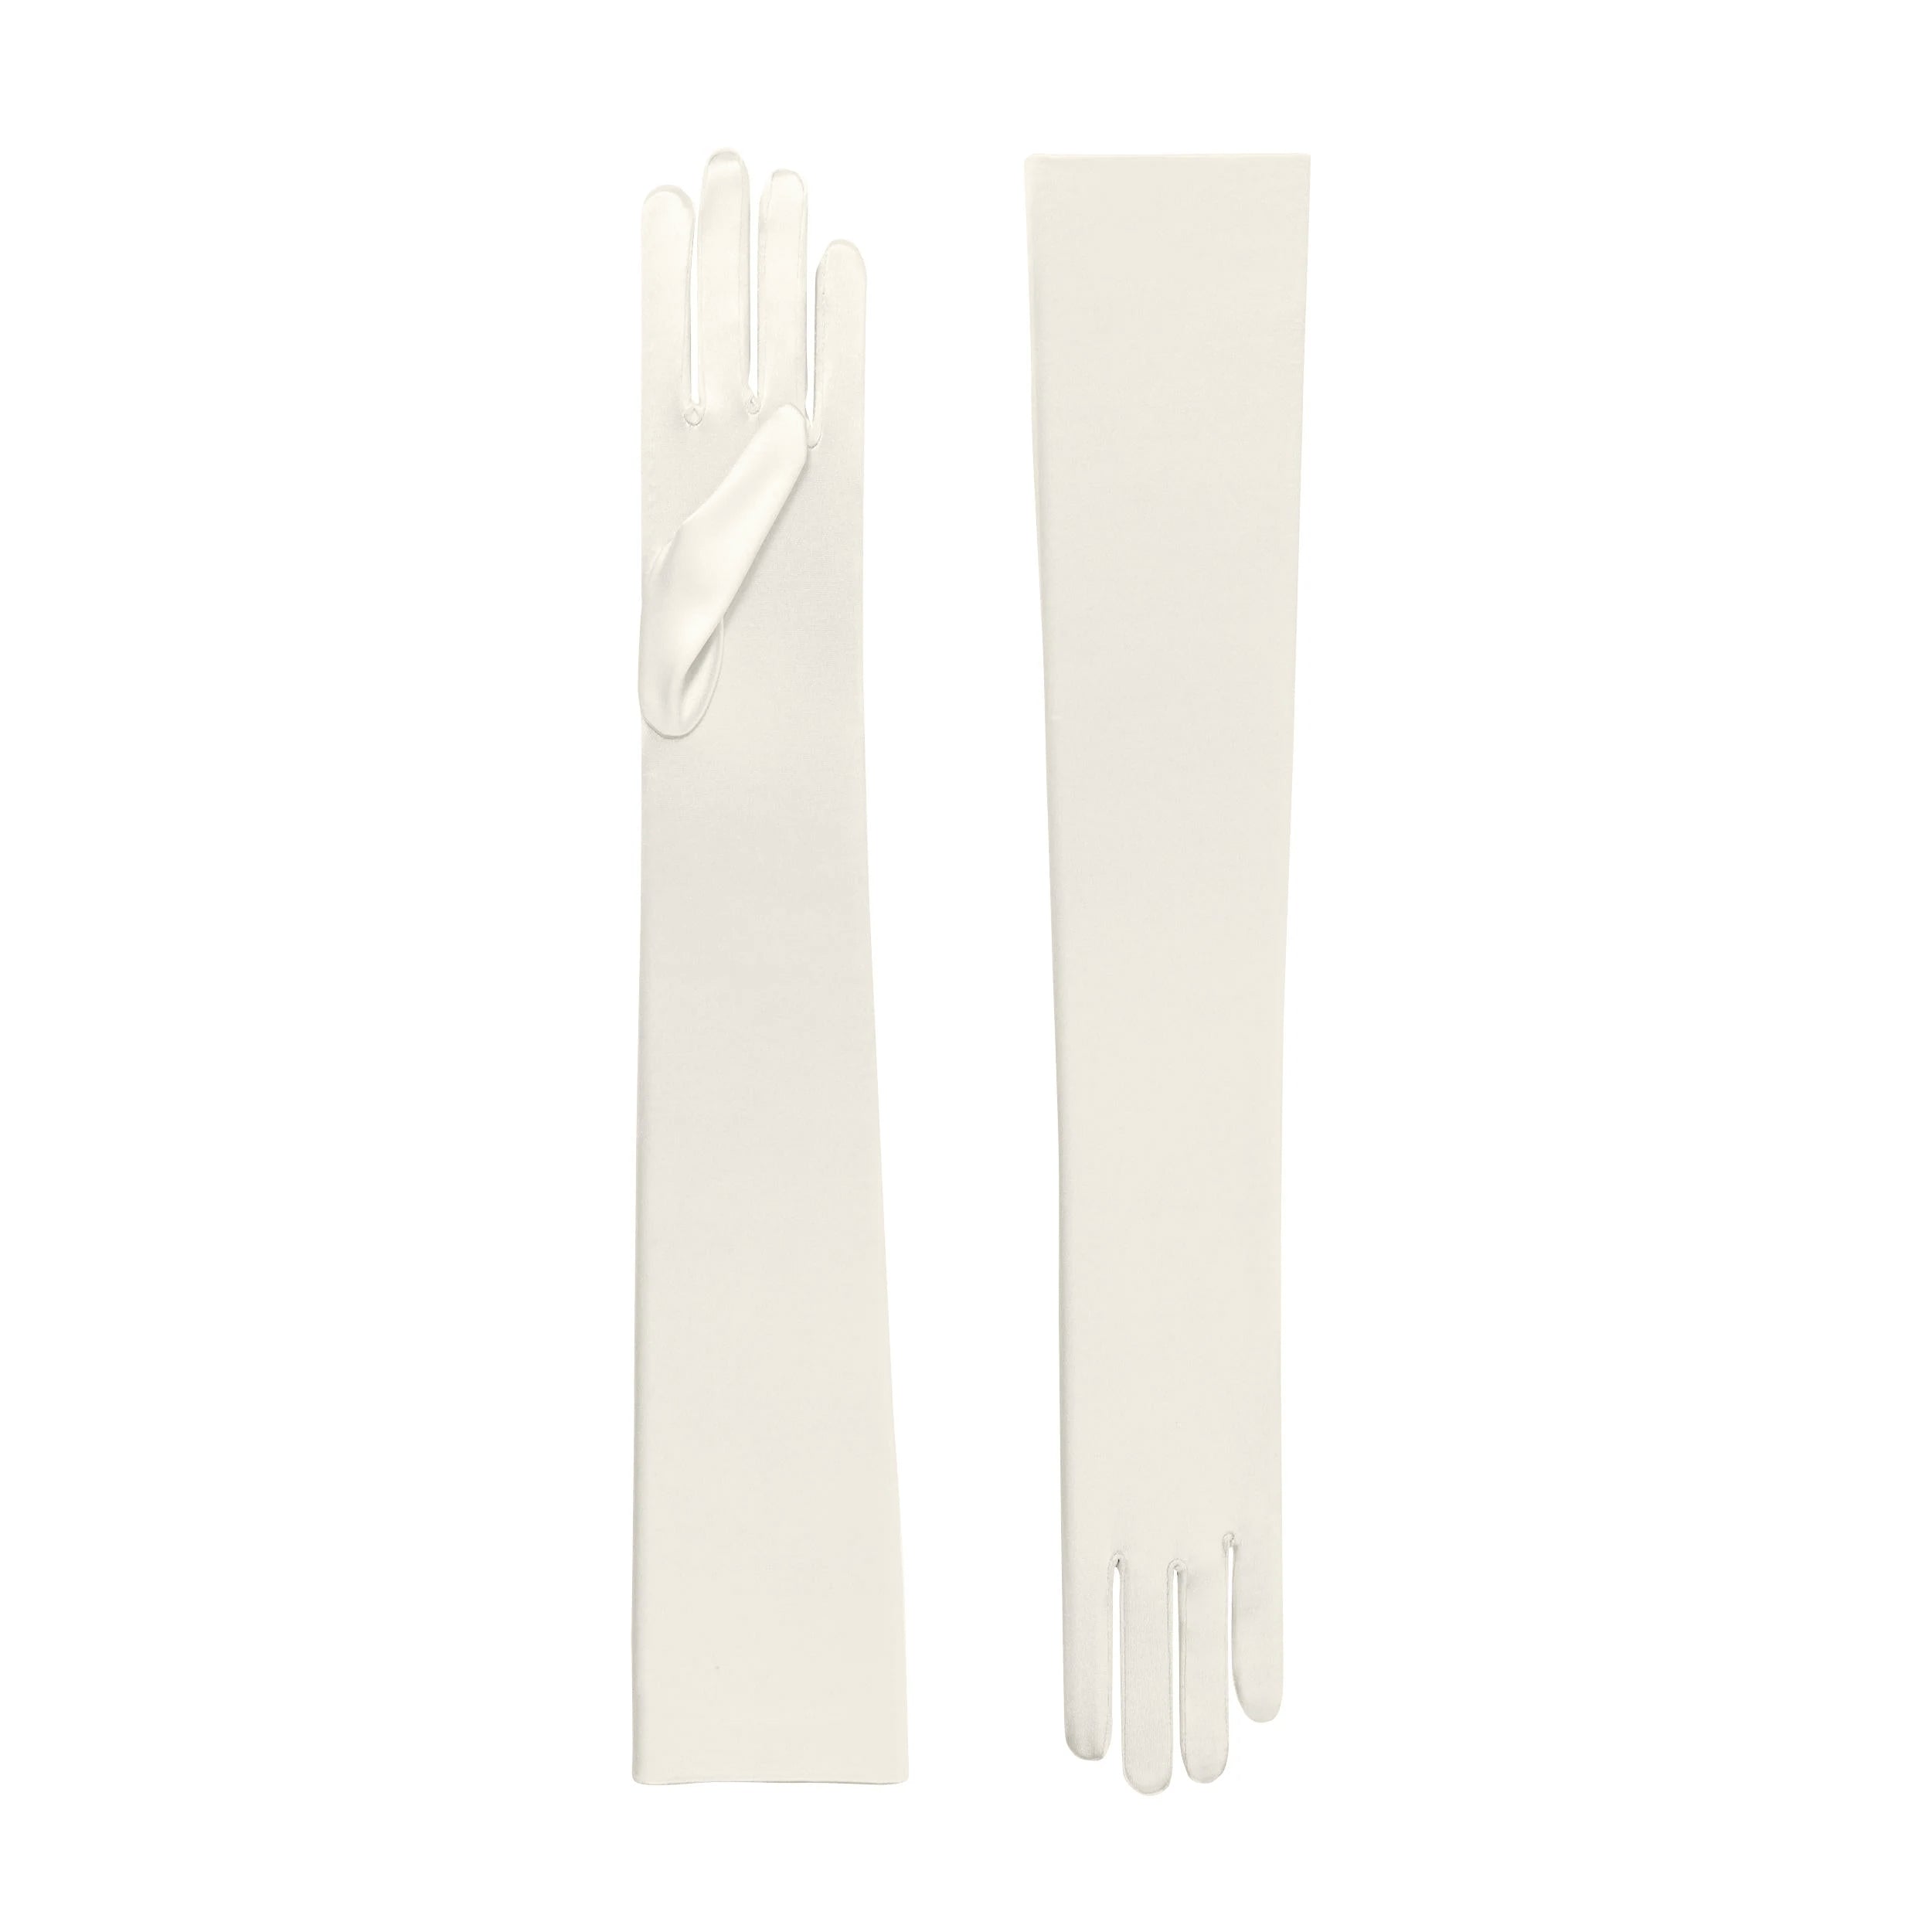 Cornelia James - Ivory Satin Opera Gloves - Hermione - Size Large (8½) - Made to Measure Evening Gloves by Cornelia James